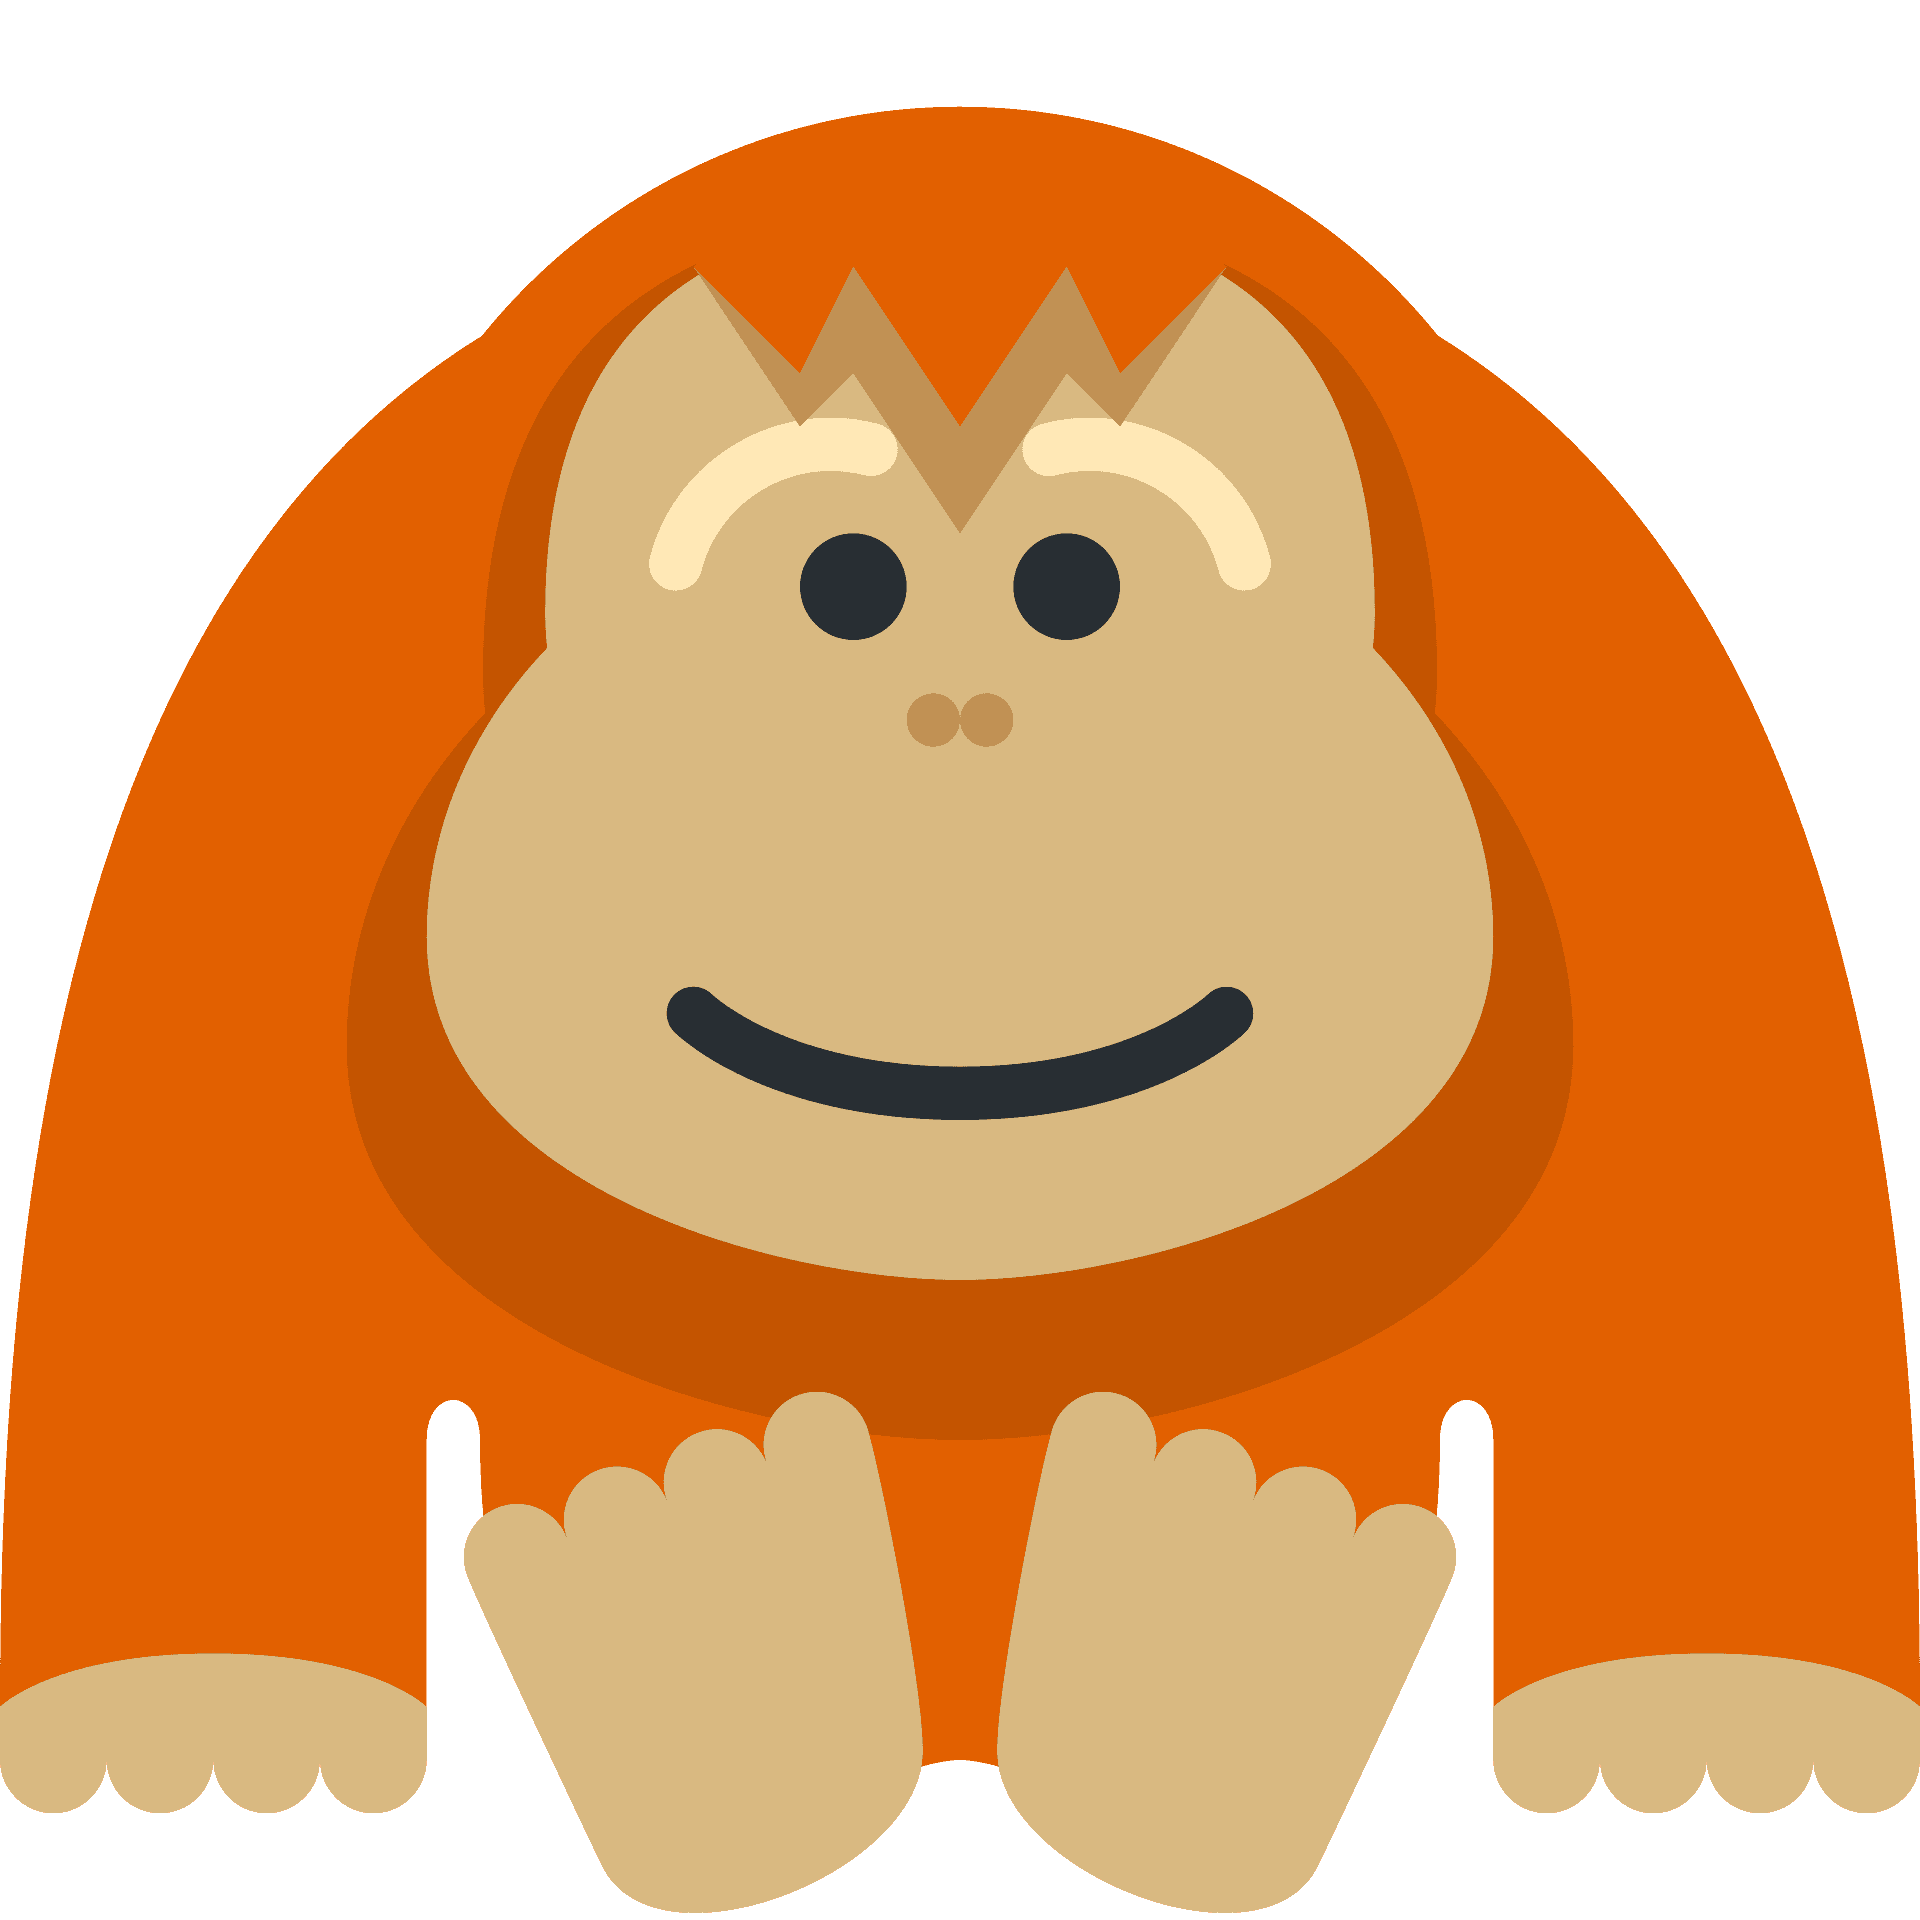 Orangutan PNG Isolated Image